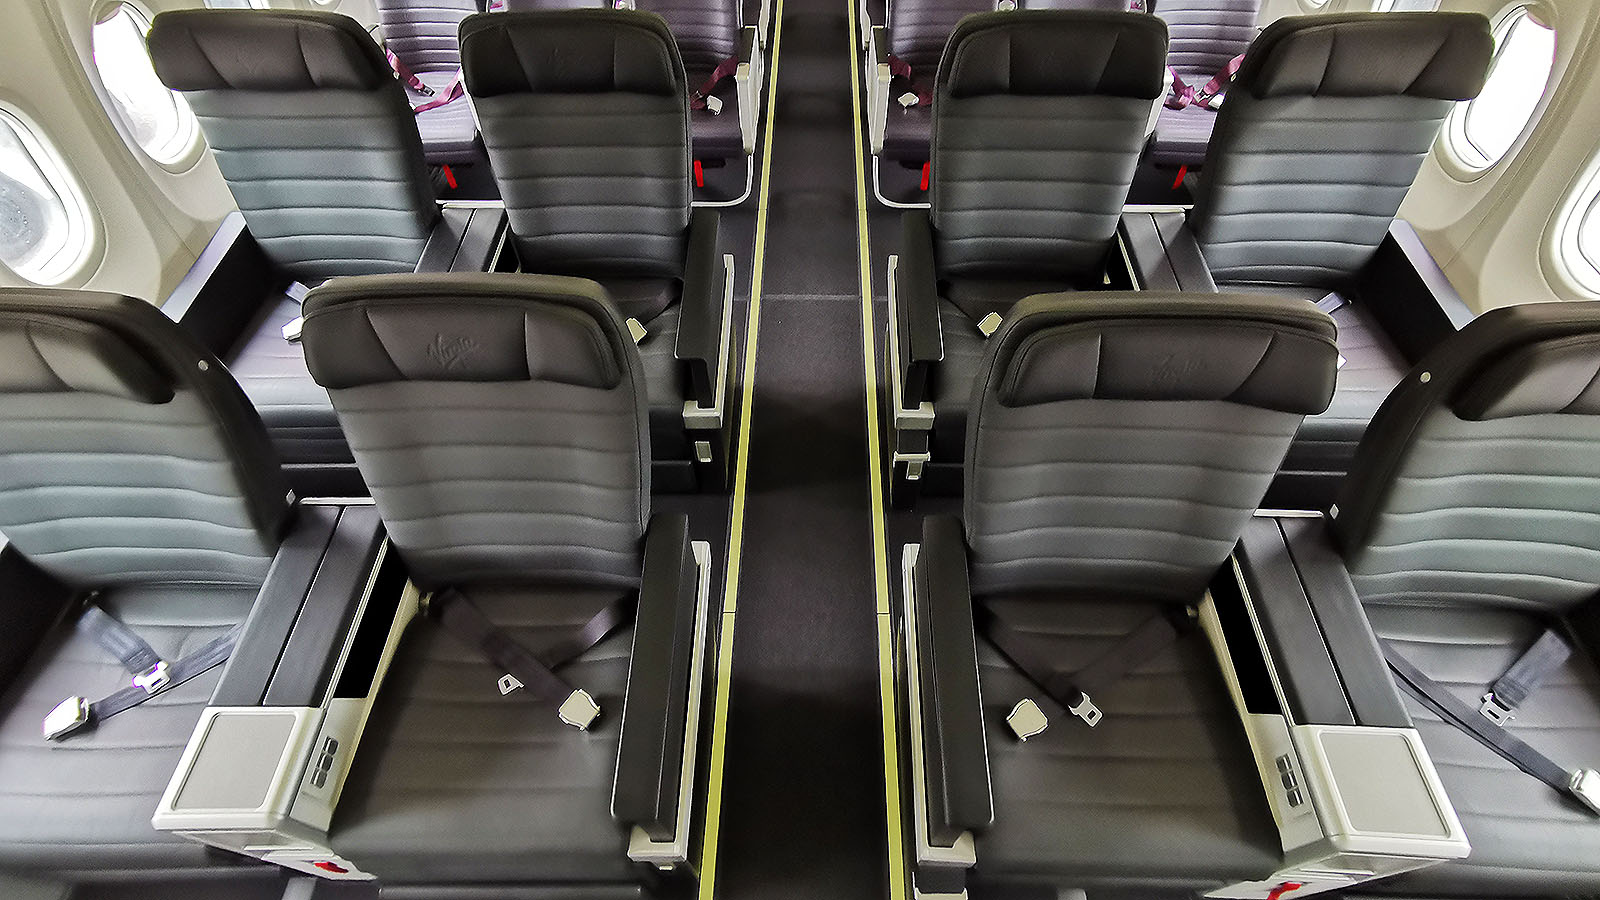 Virgin Australia's new Business Class seat